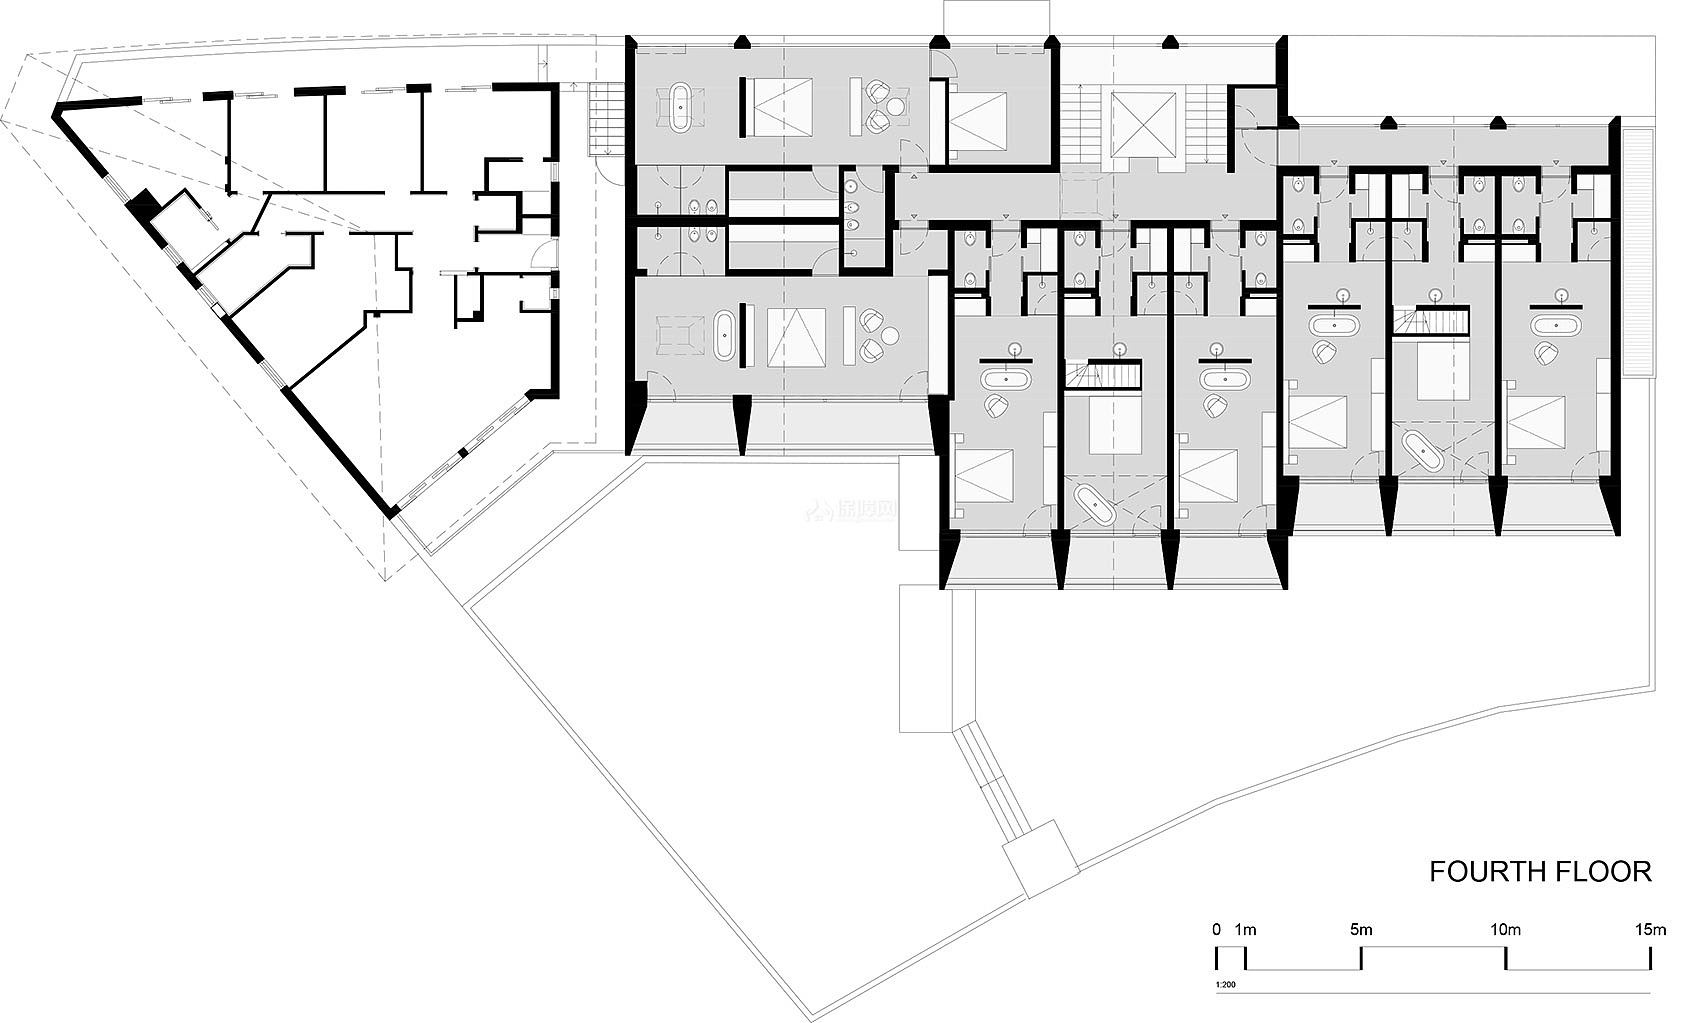 Schgaguler酒店之五层平面图